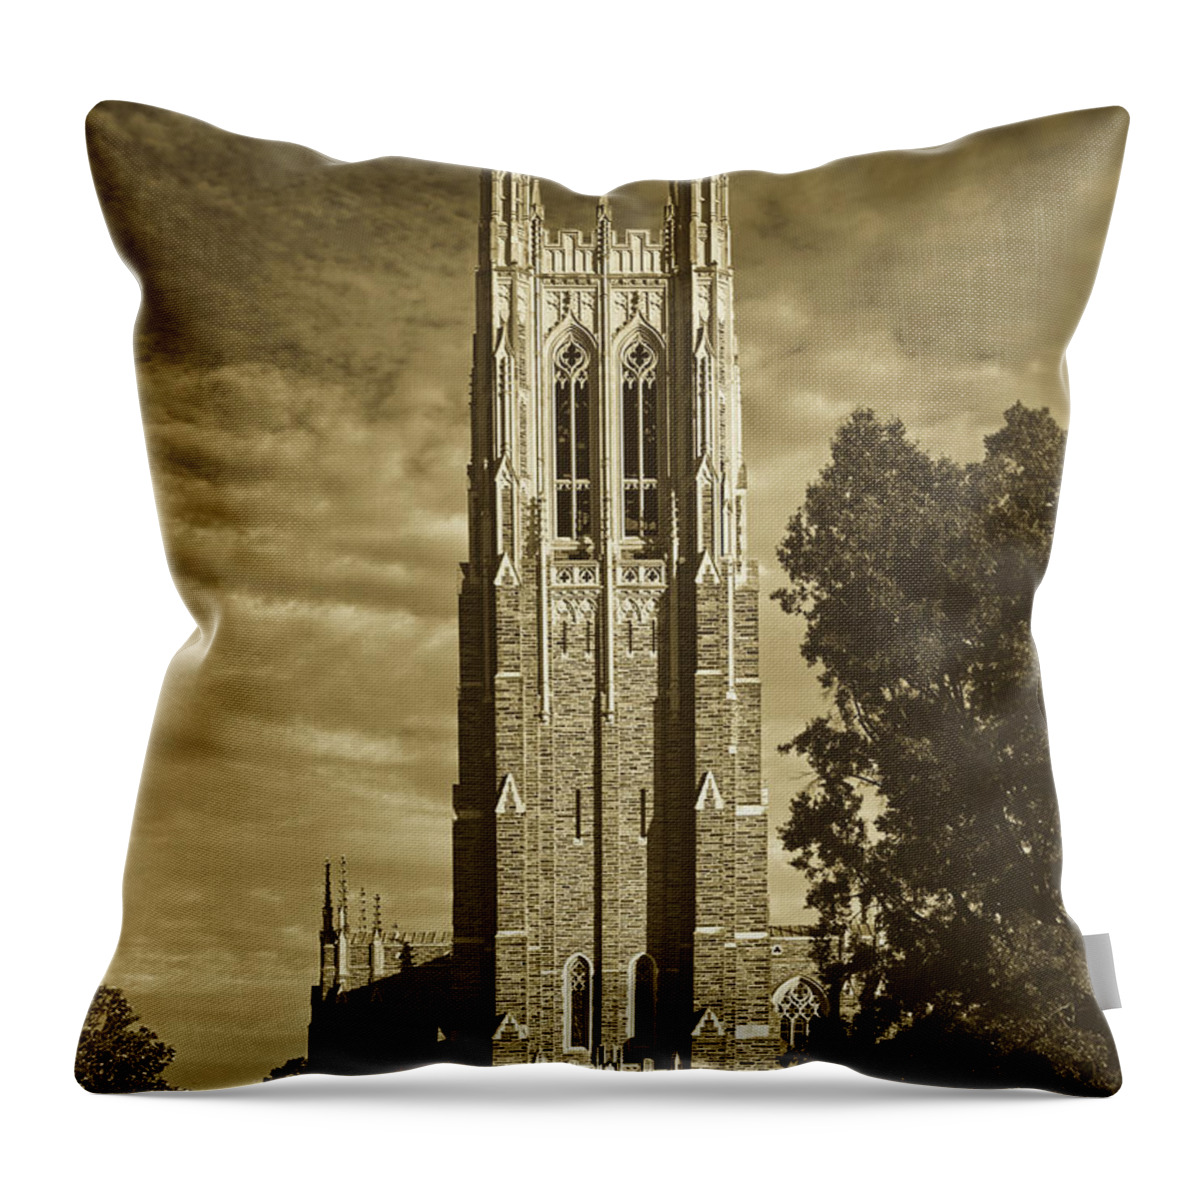 Duke University Throw Pillow featuring the photograph Chapel Tower - Duke University #2 by Mountain Dreams